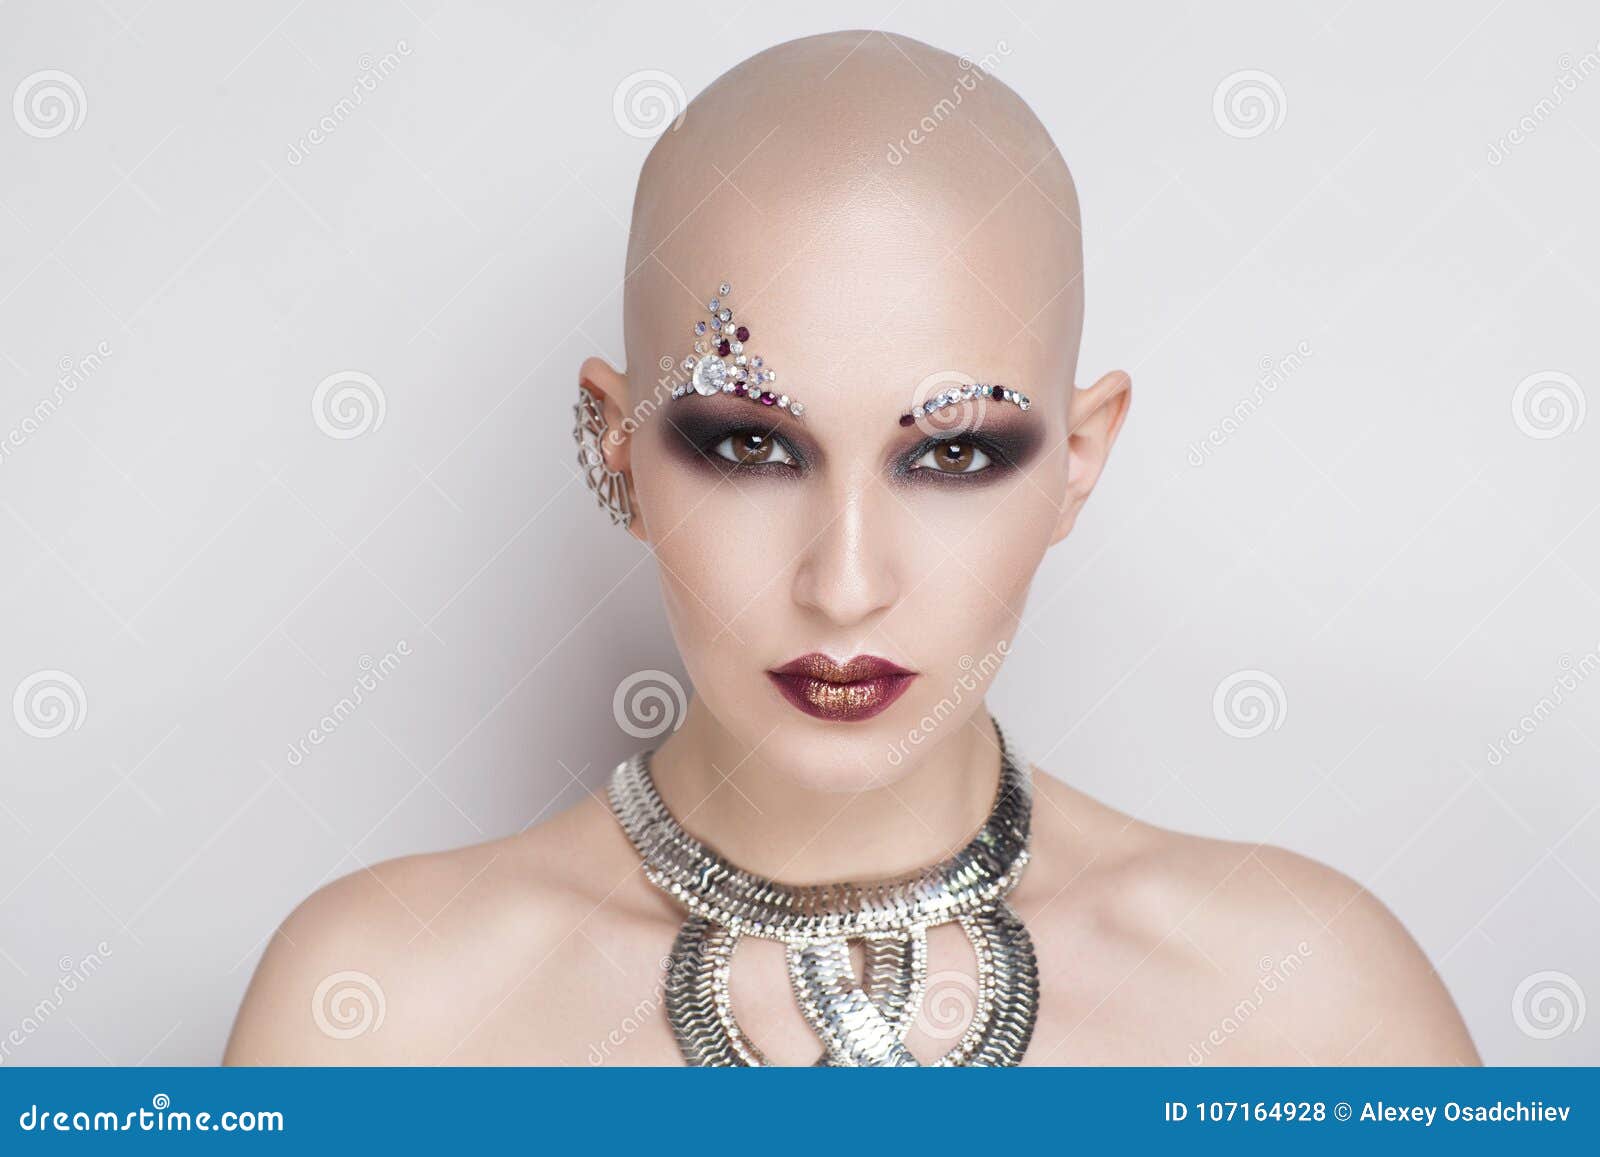 photos woman headed sex bald